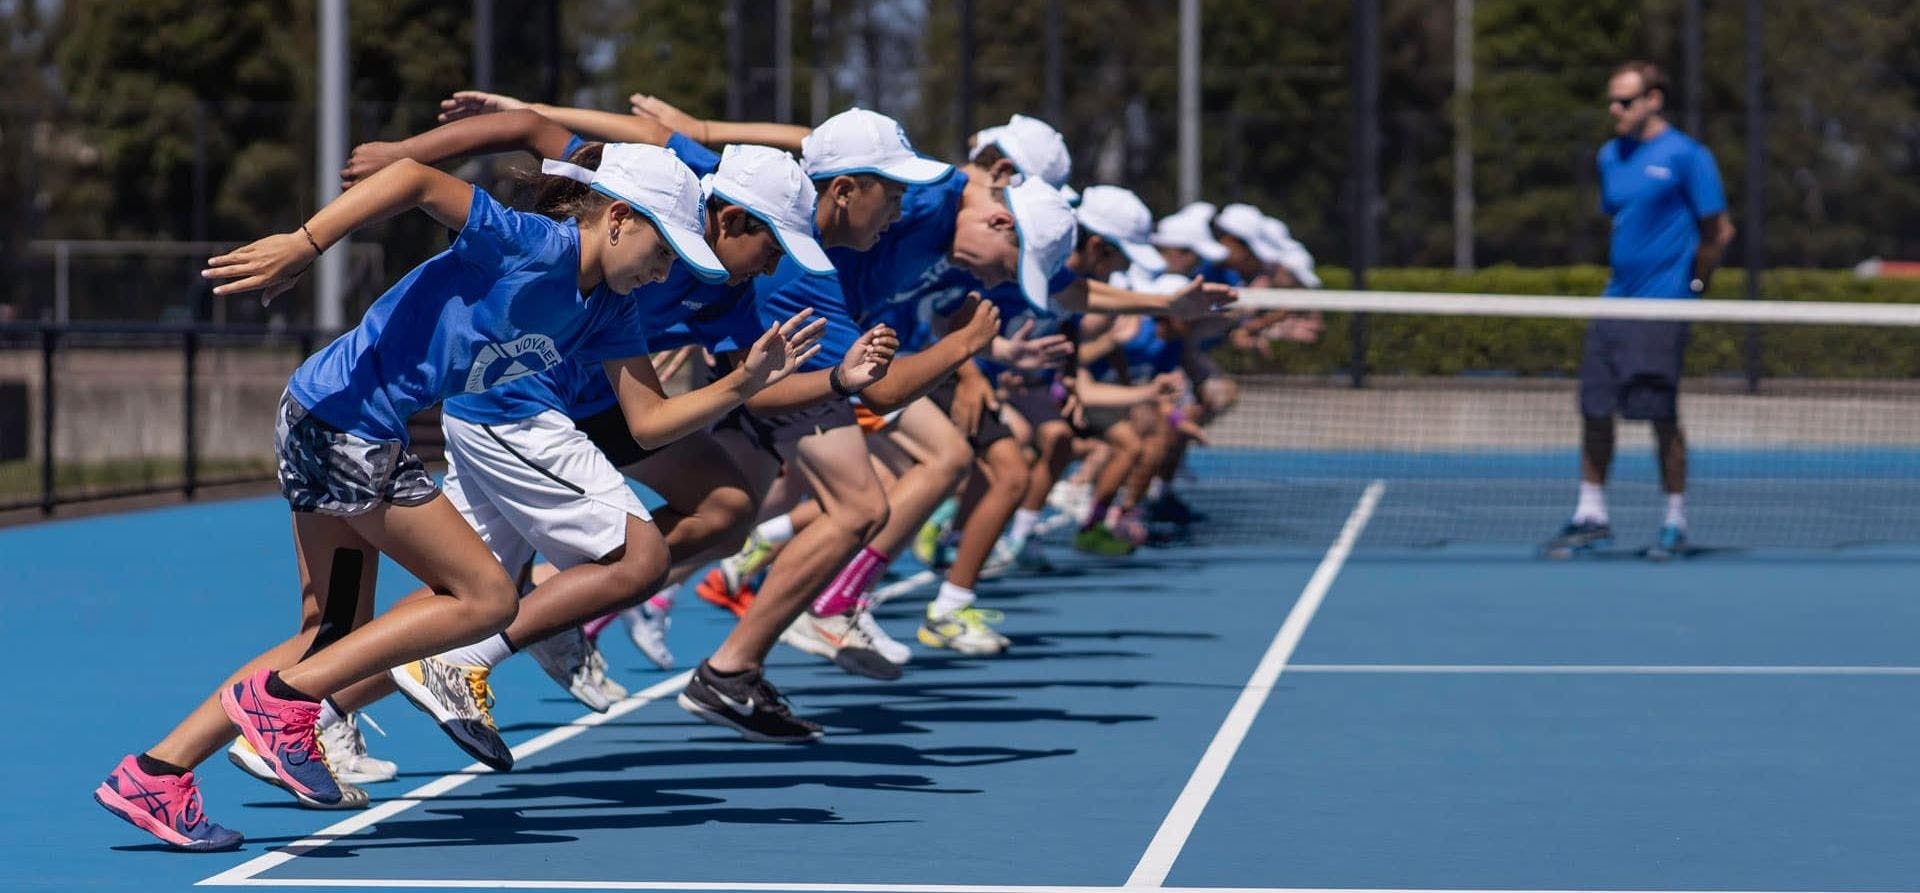 Voyager Tennis Academy